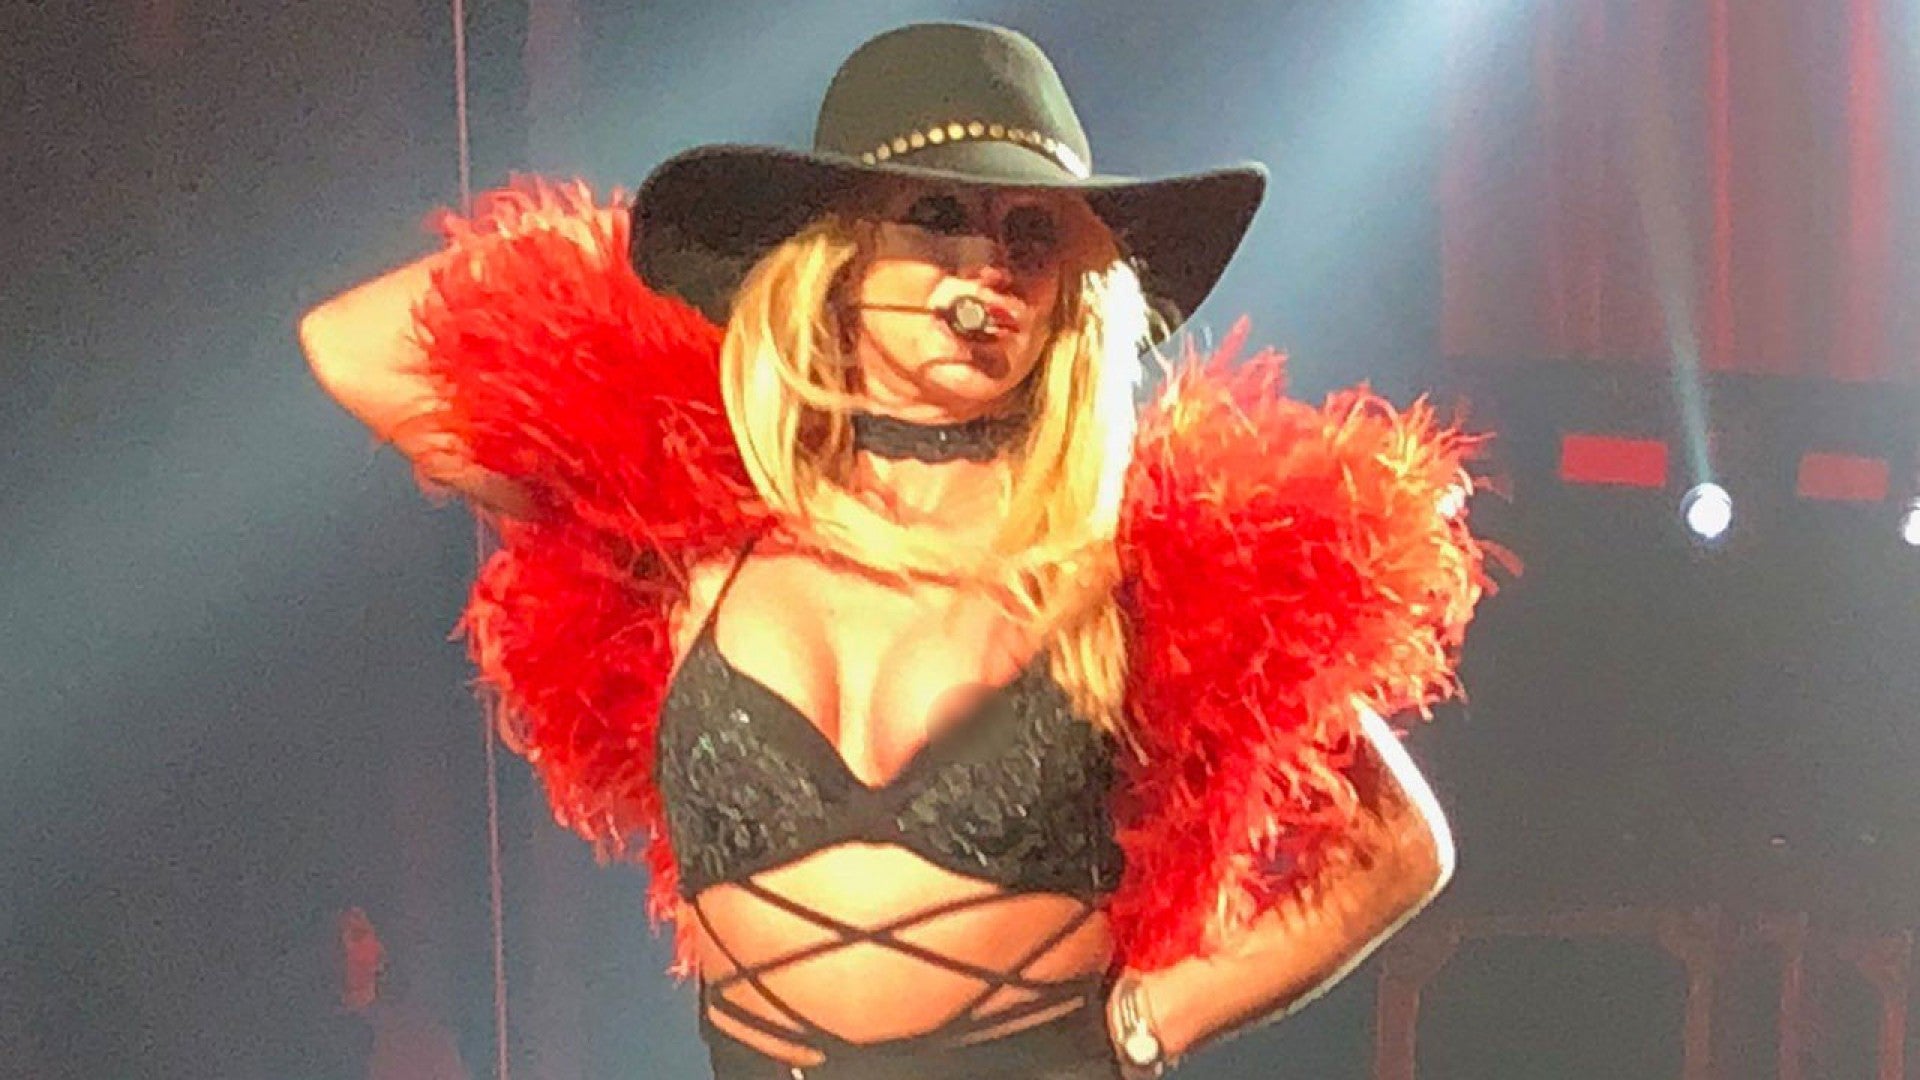 Britney spears sexy vegas show